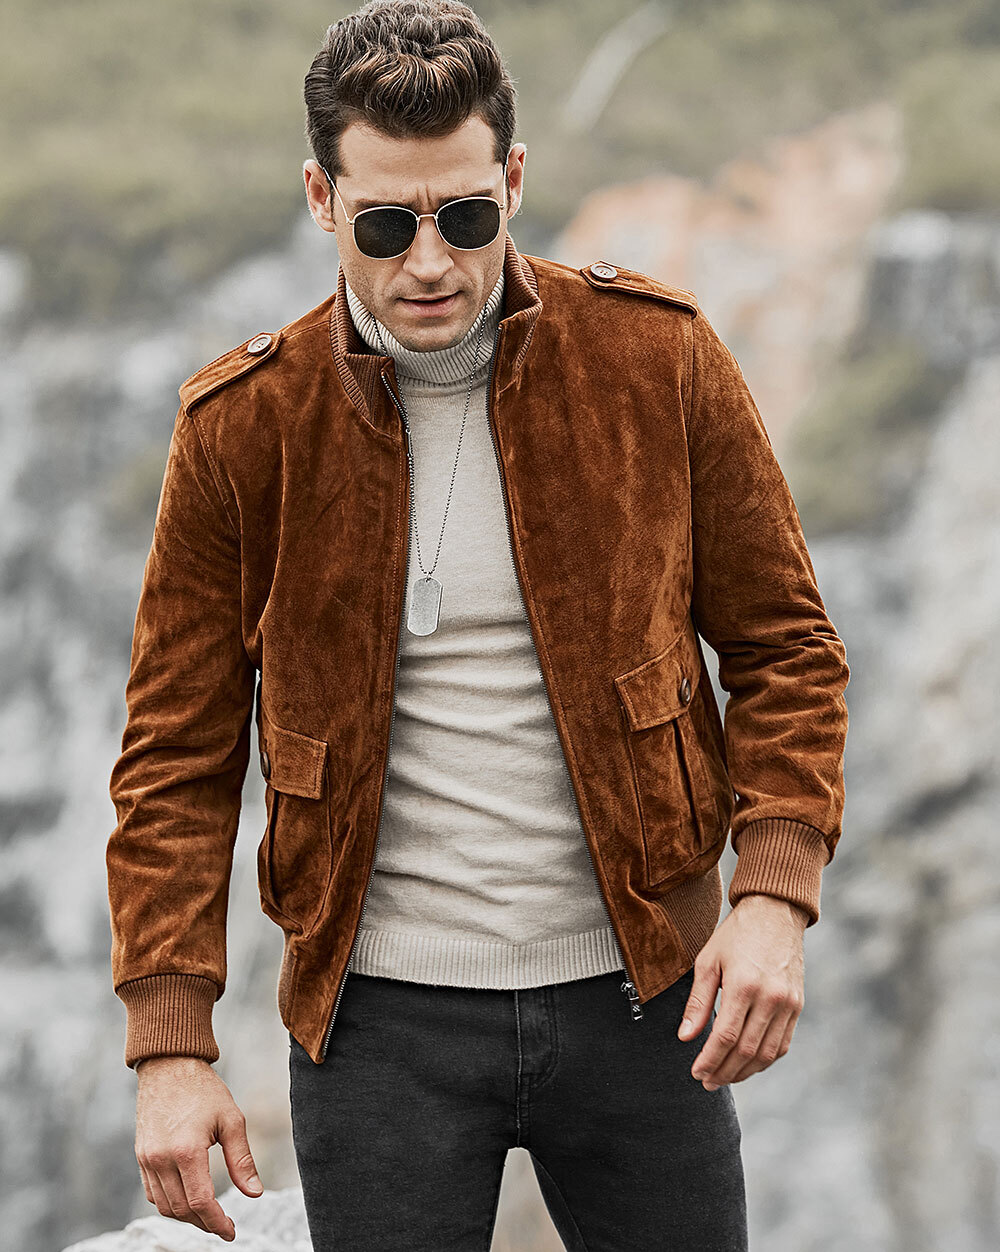 Men's Leather Jacket Stand Collar Rib botton and Cuff  177 Fashion genuine stand collar rib botton jacket| fashion flavor leather stand collar rib button jacket